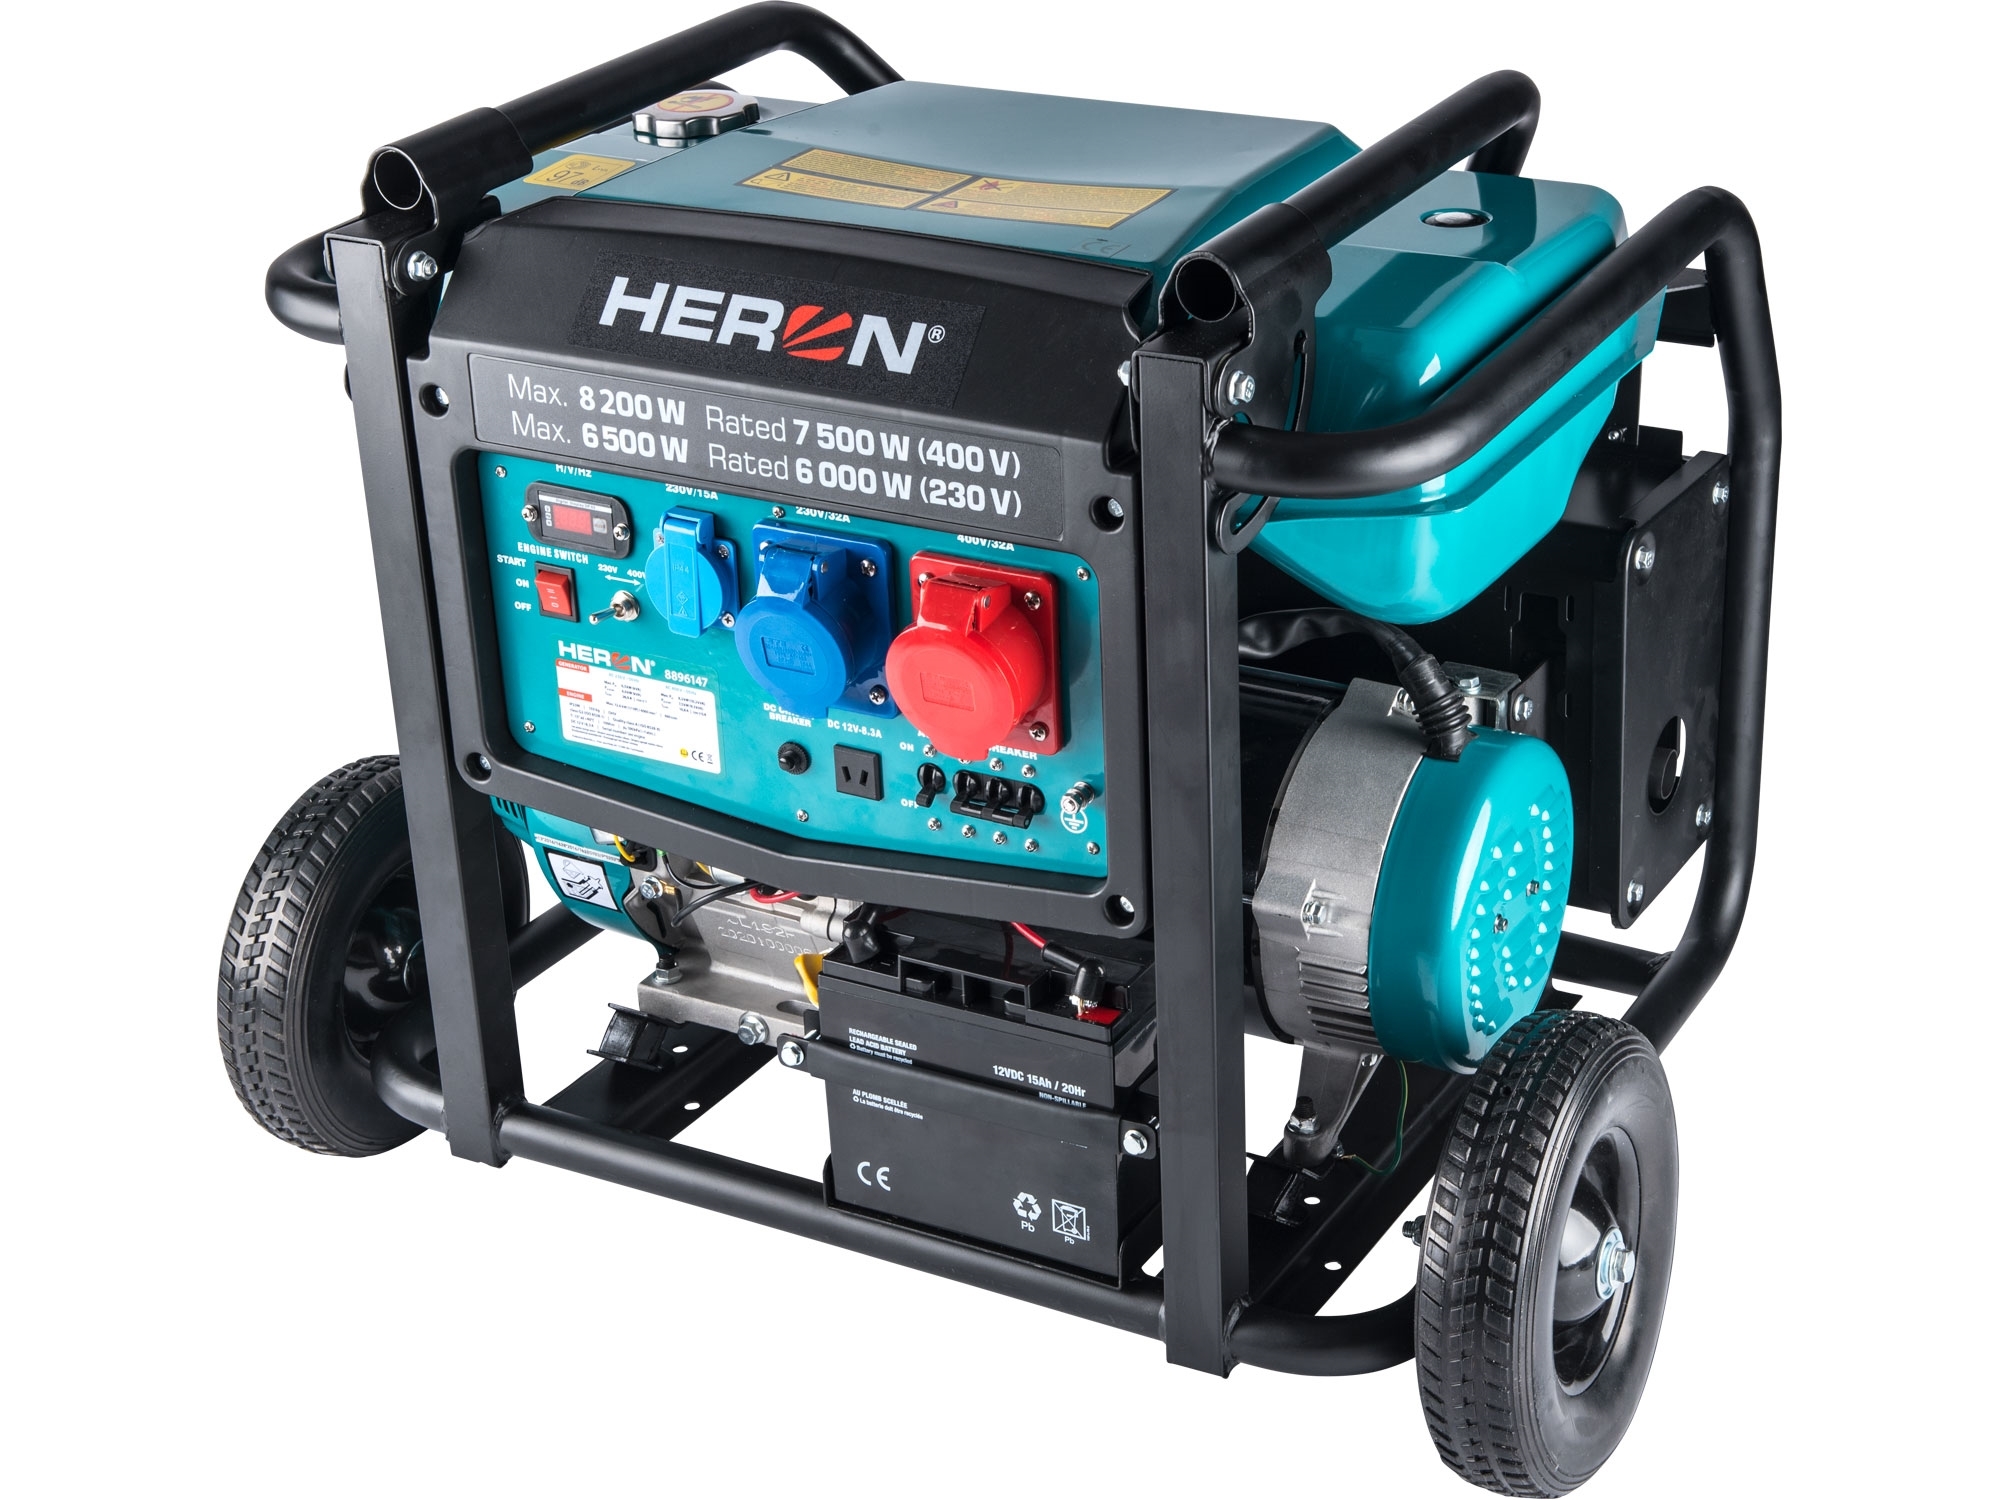 Elektrocentrála HERON benzínová s el. startem - 17 HP, 6,5/8,2 kW, 230V/400V